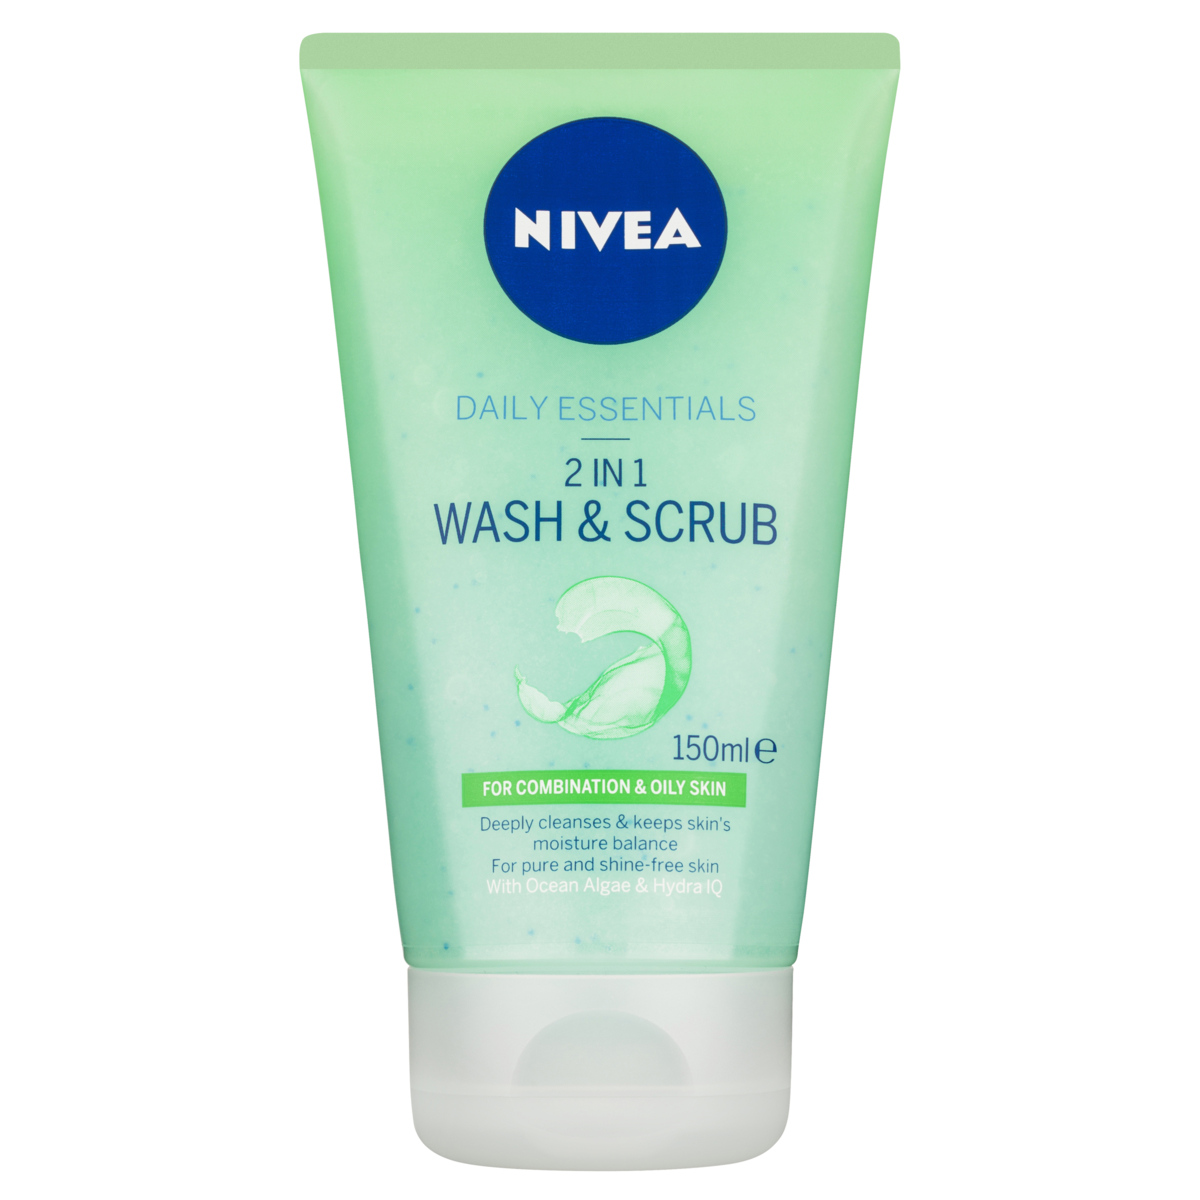 Nivea Daily Essentials 2 in 1 Wash & Scrub 150ml